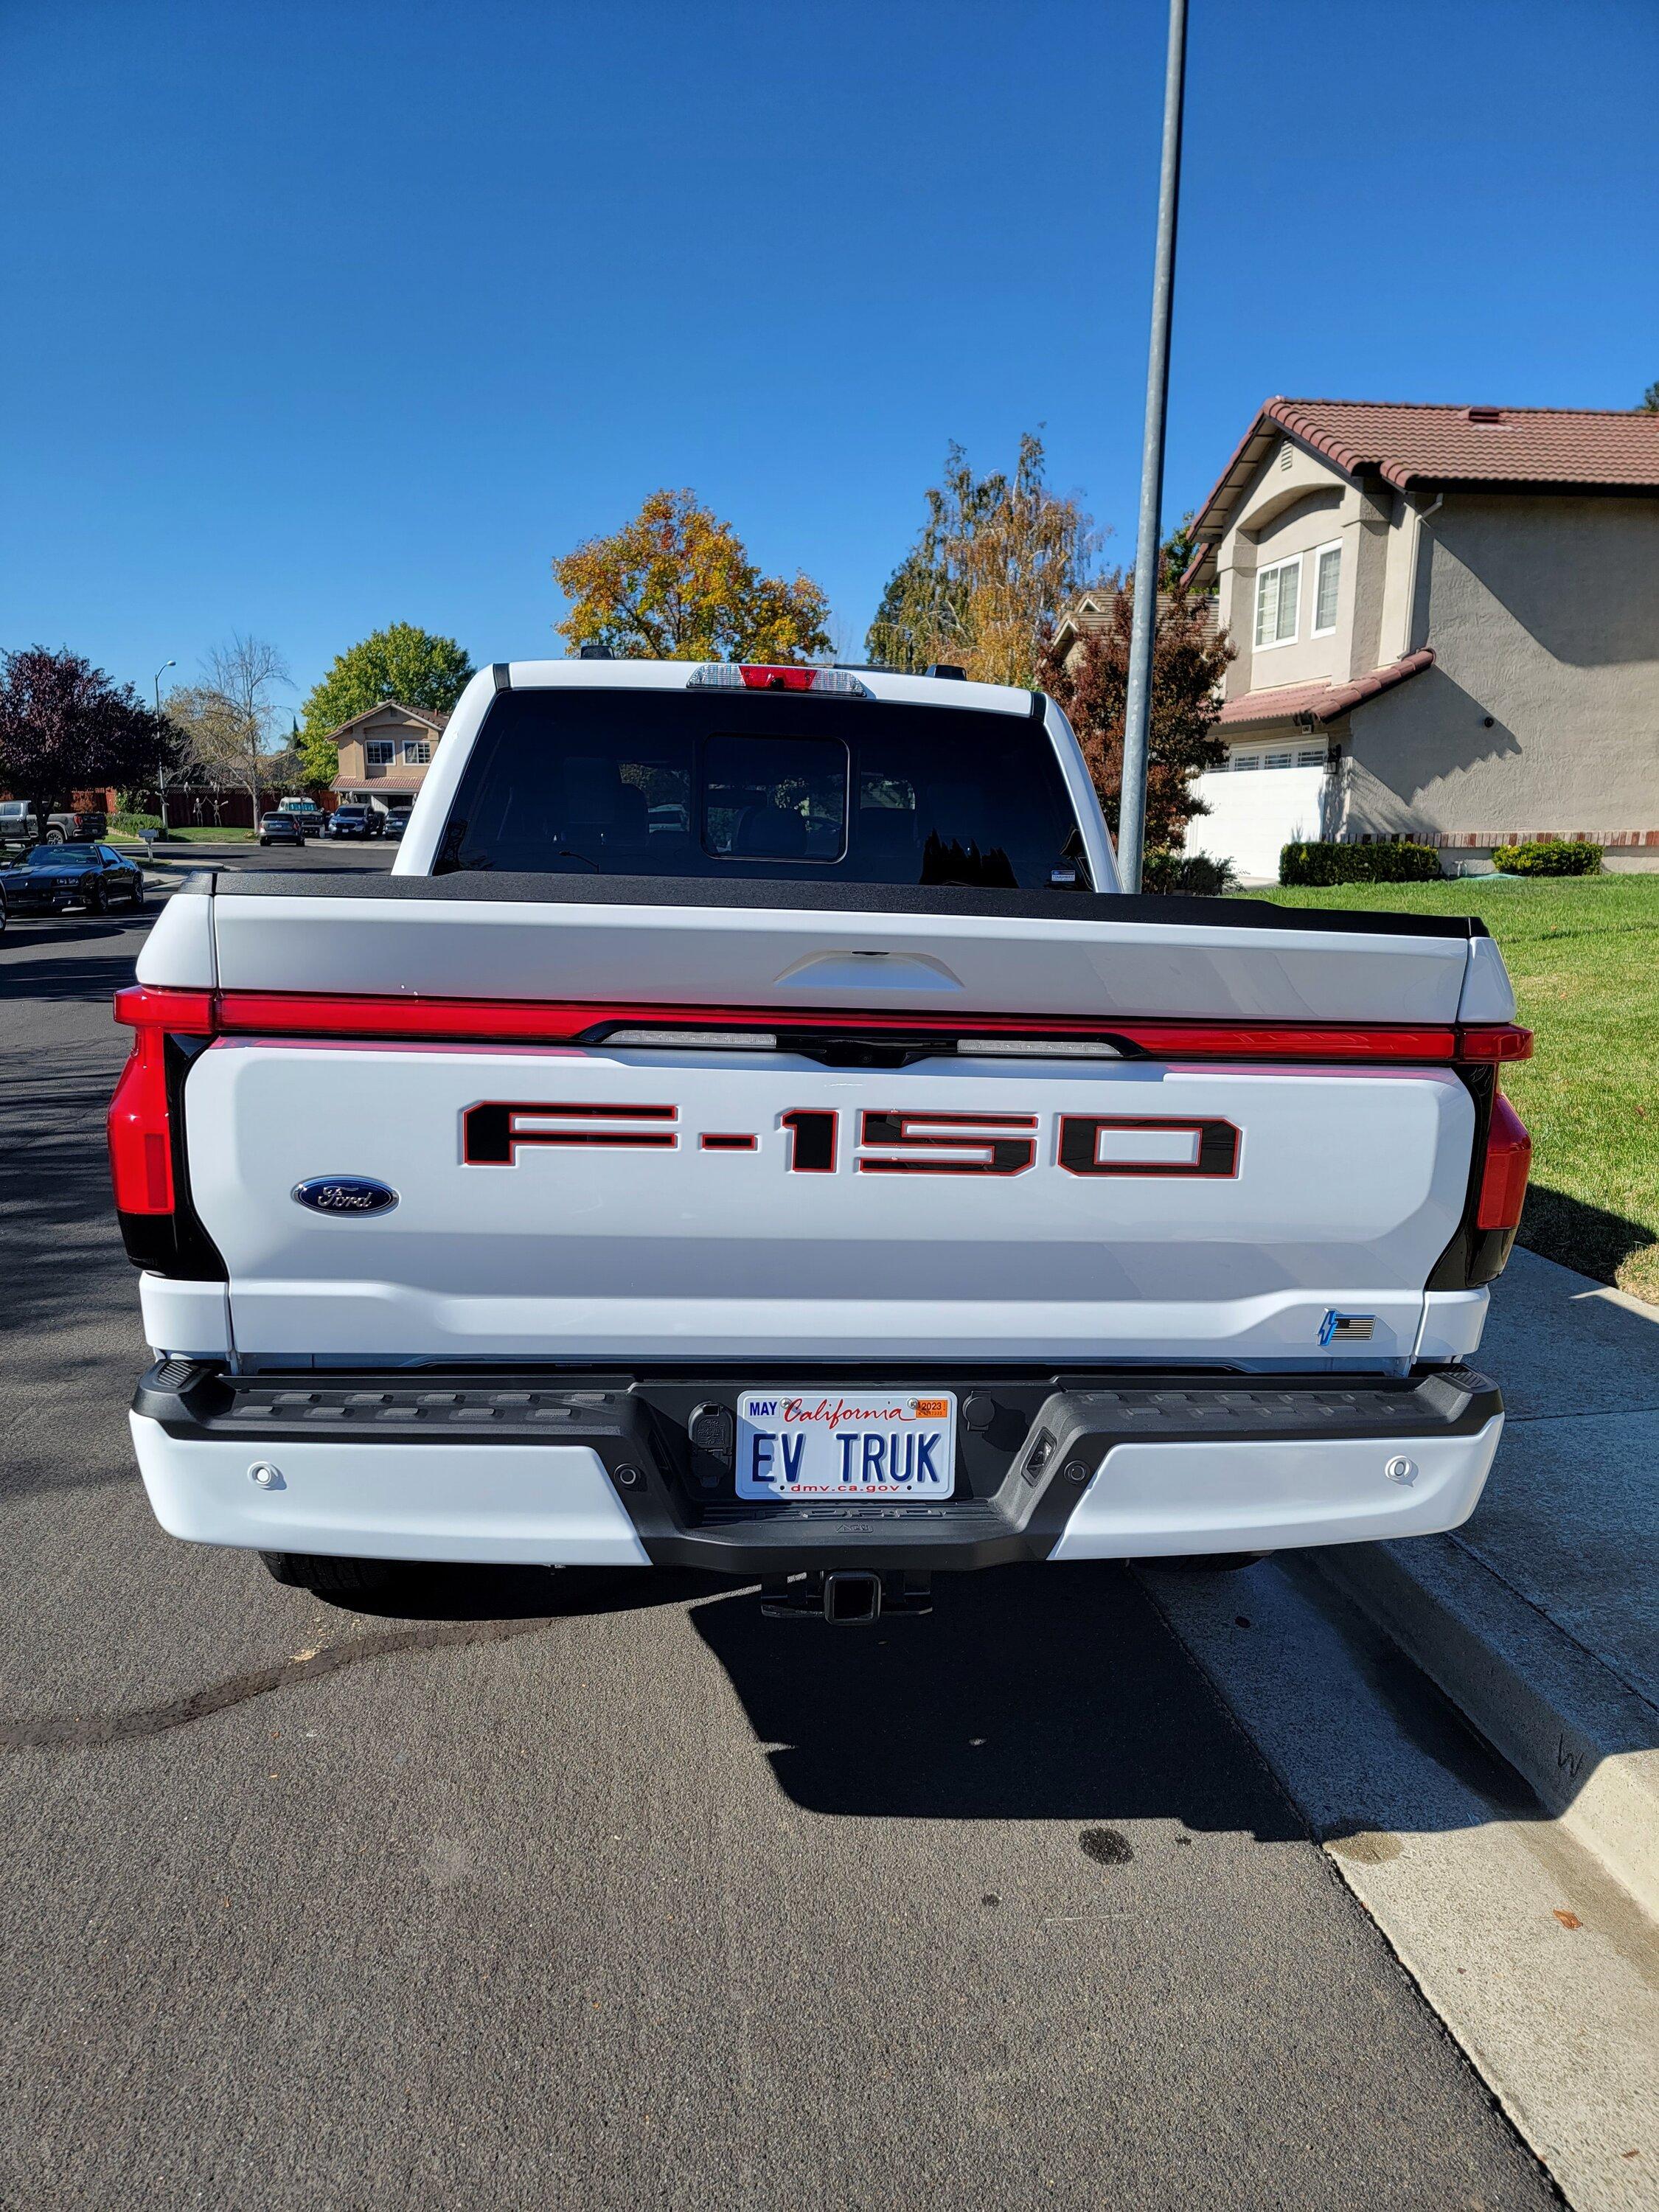 Ford F-150 Lightning Vanity Plates? 20221030_113545